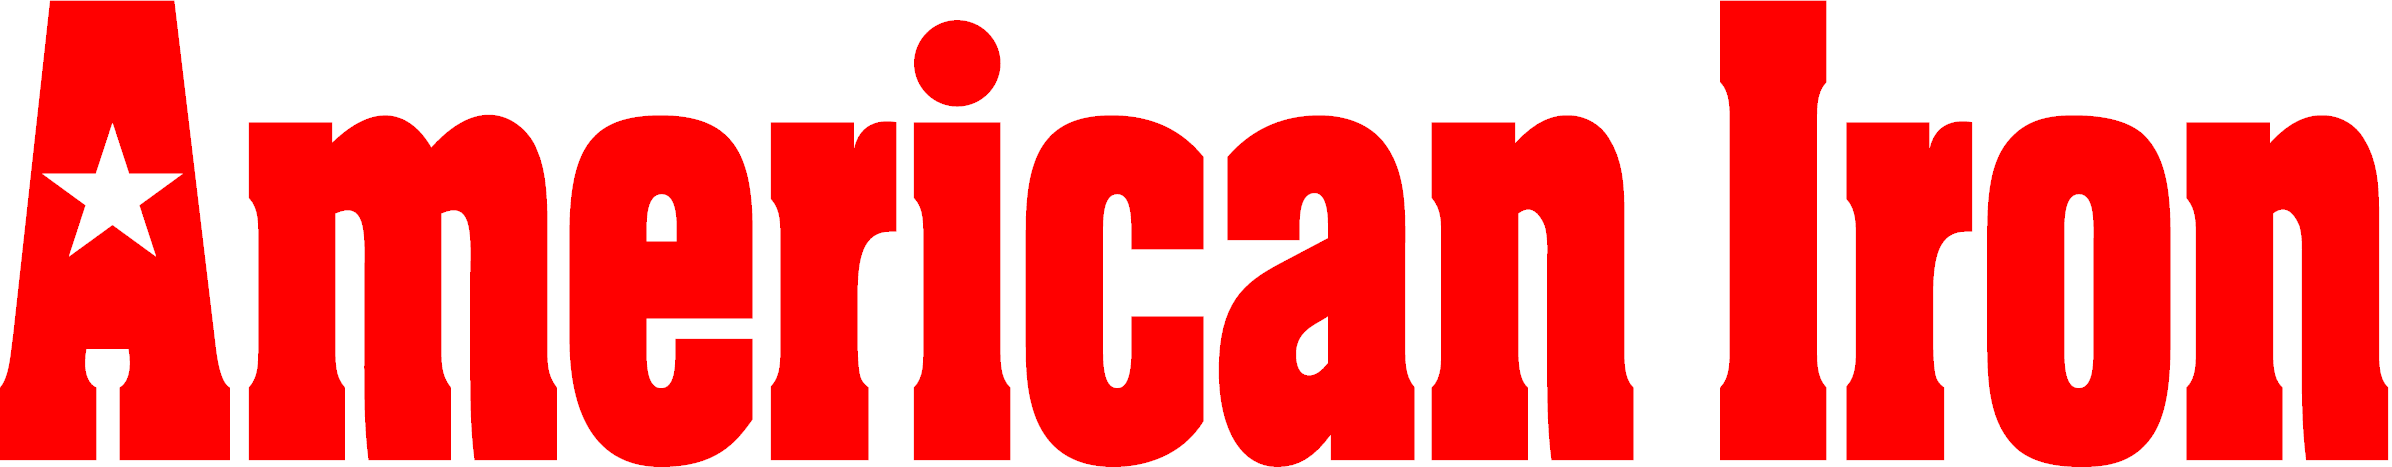 American Iron Magazine Logo - American Iron Subscription Services